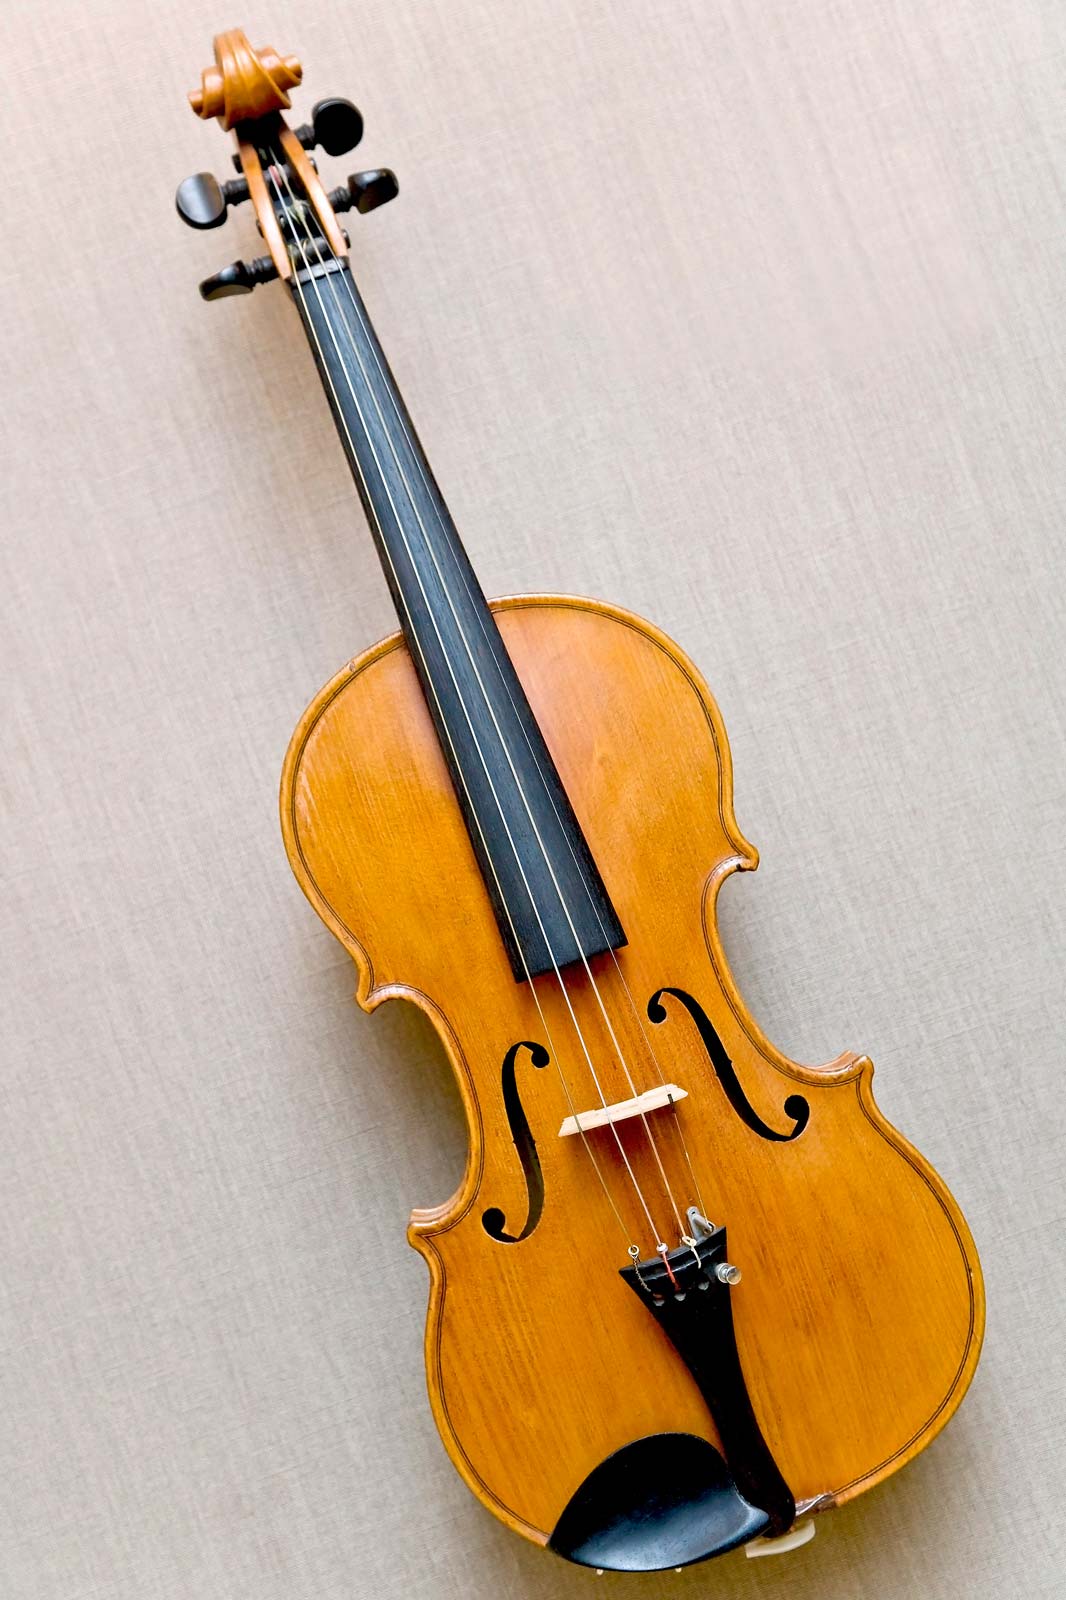 National instrument of Austria